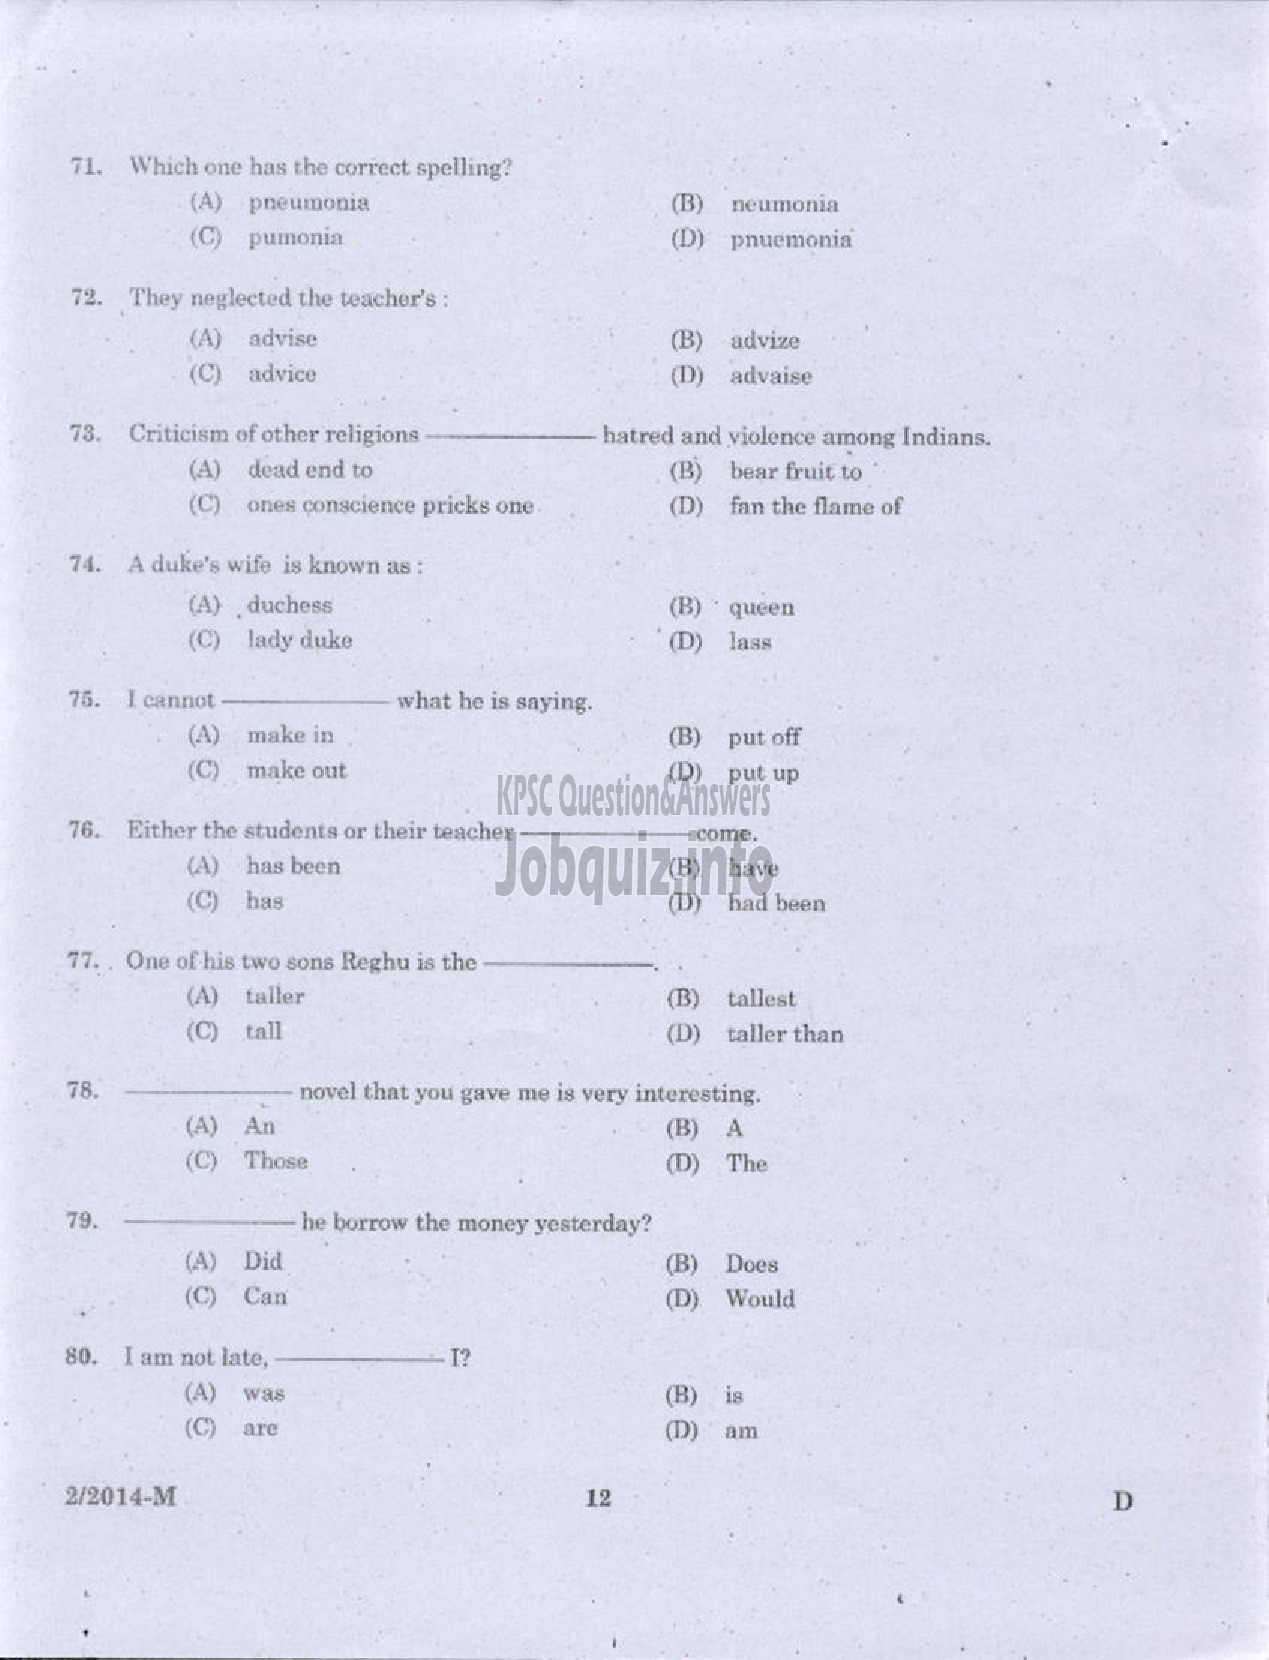 Kerala PSC Question Paper - LDC VARIOUS 2014 WAYANAD ( Malayalam ) -10